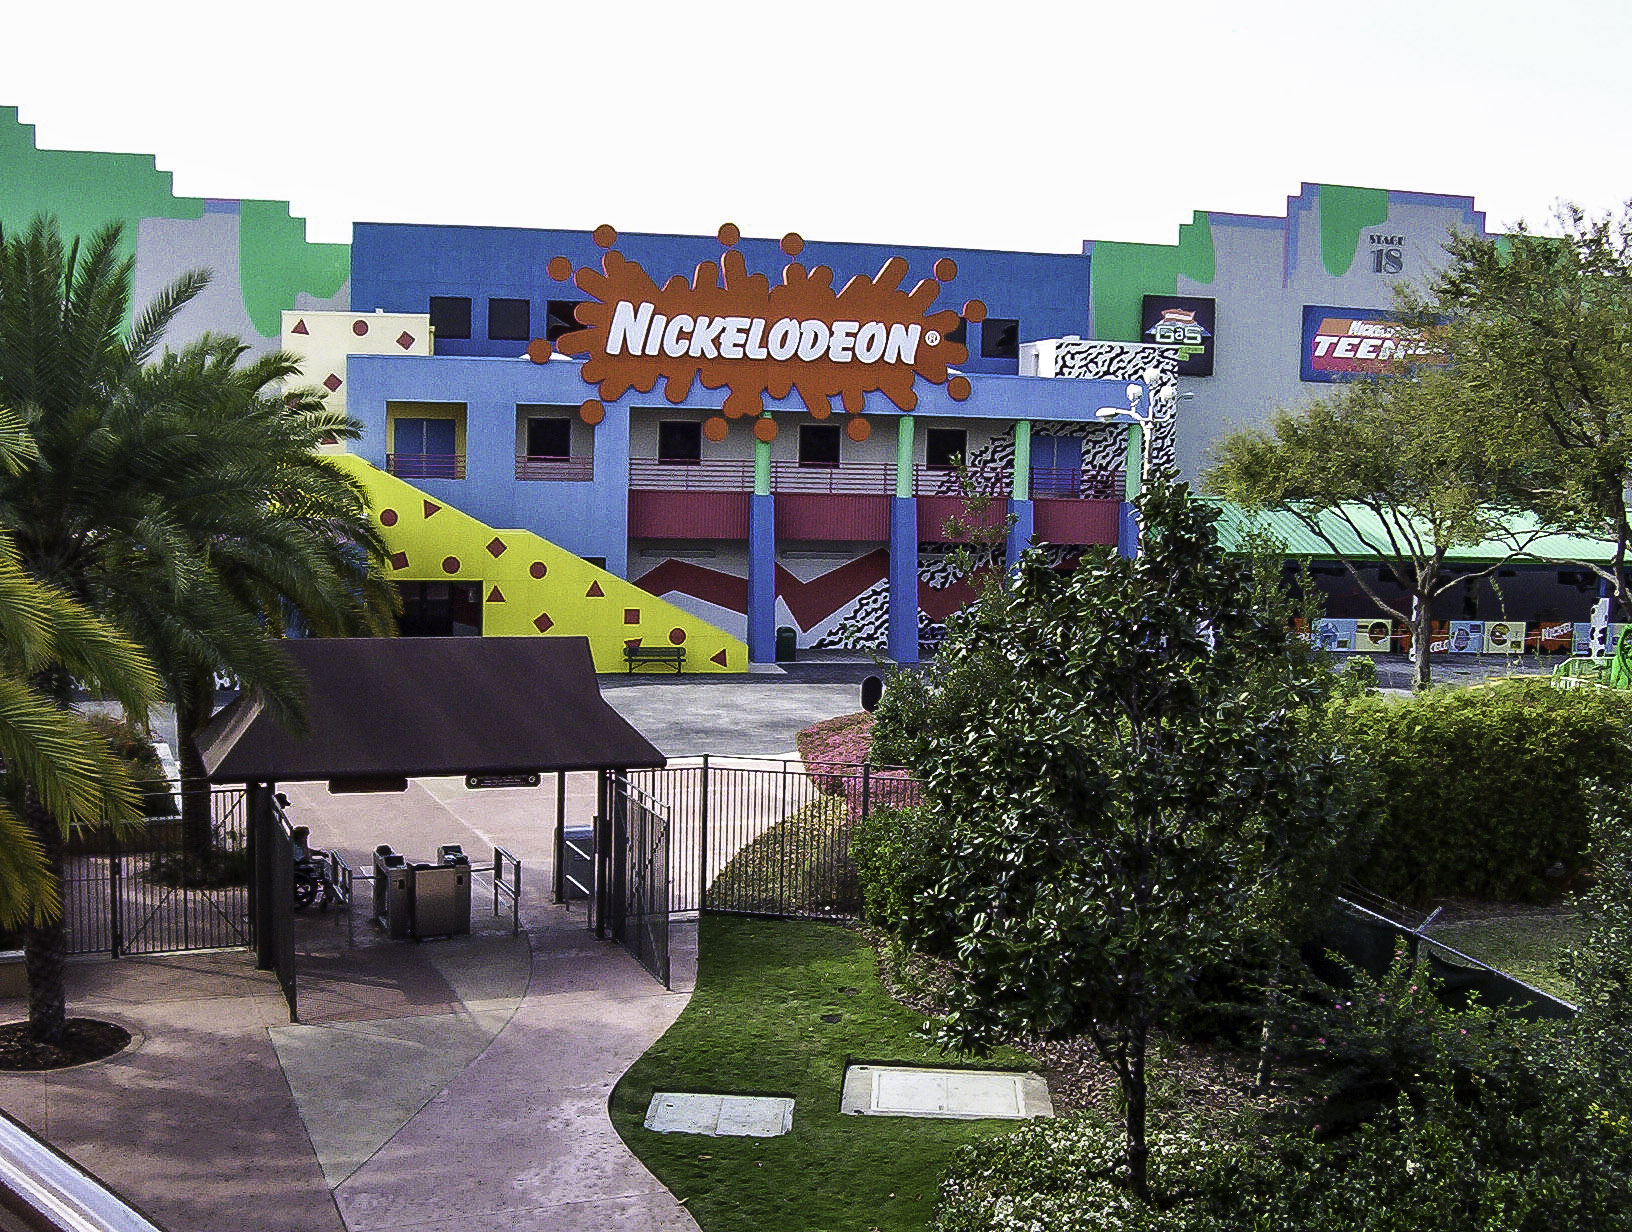 Nickelodeon Studios in Universal Studios, Orlando, Florida image - Free stock photo - Public Domain photo - CC0 Images